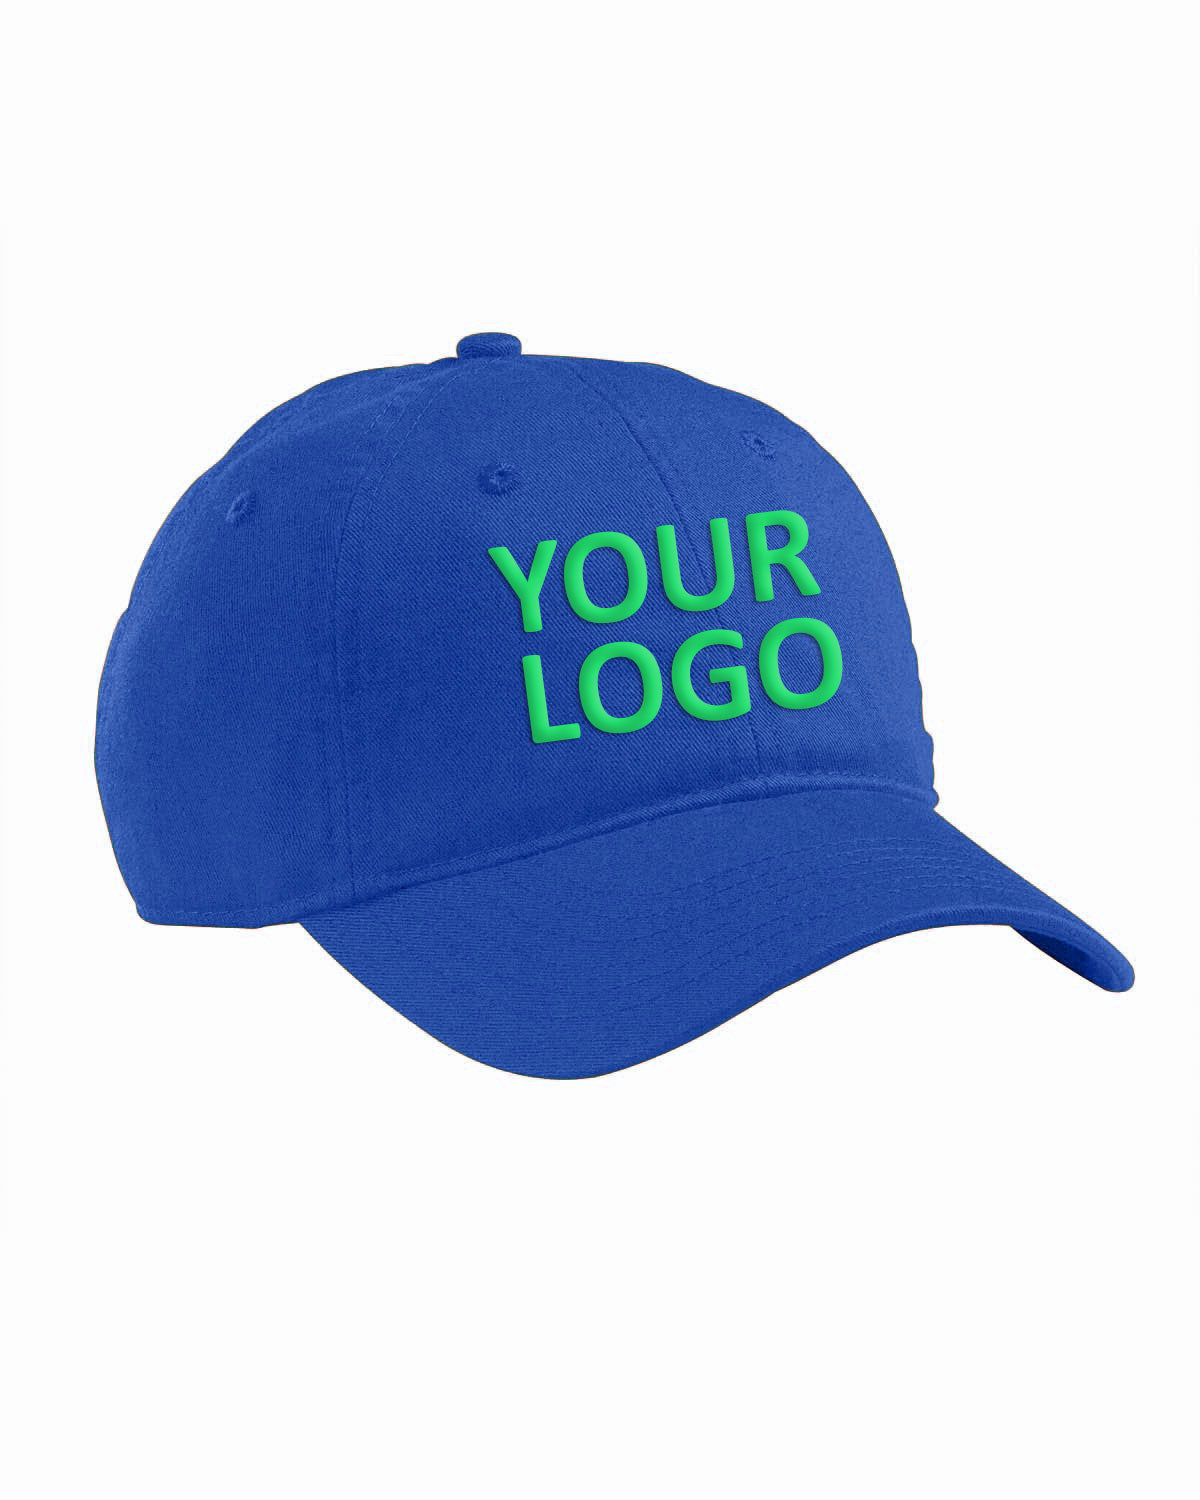 econscious_ec7000_royal_company_logo_headwear